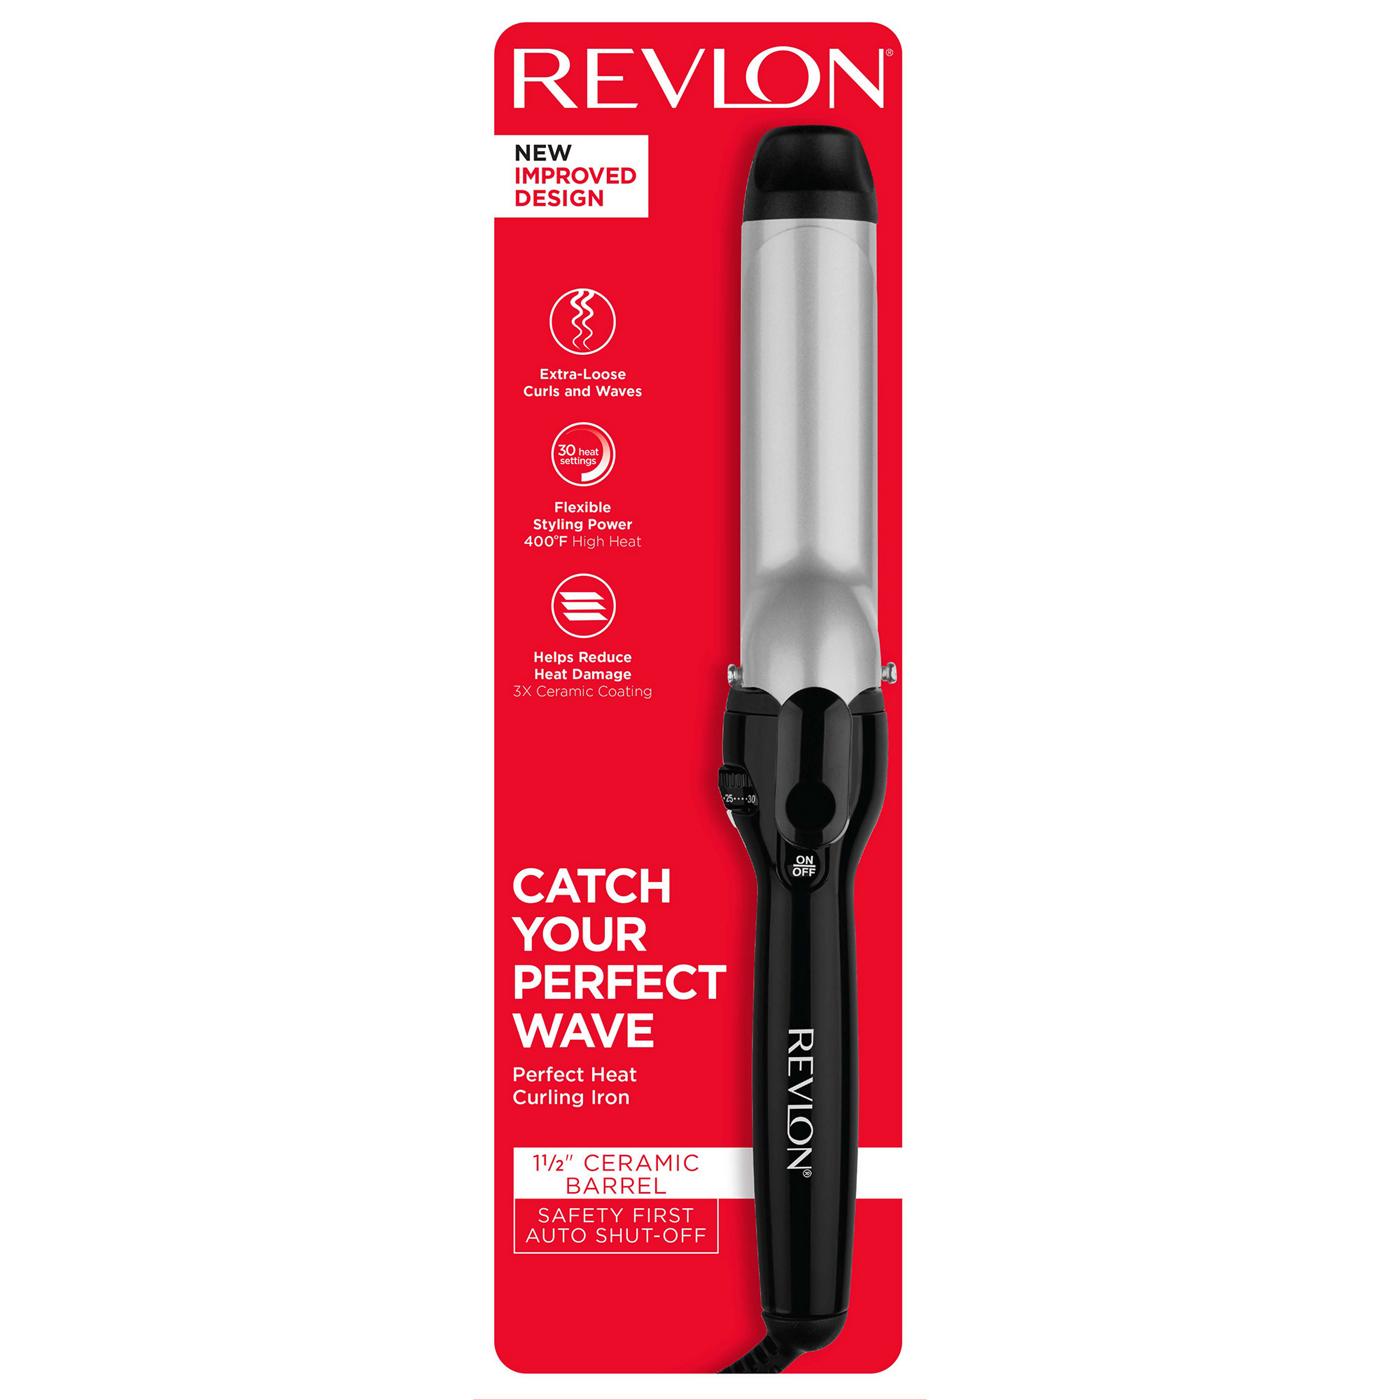 Revlon Ceramic Hair Curling Iron 1-1/2 in; image 1 of 5